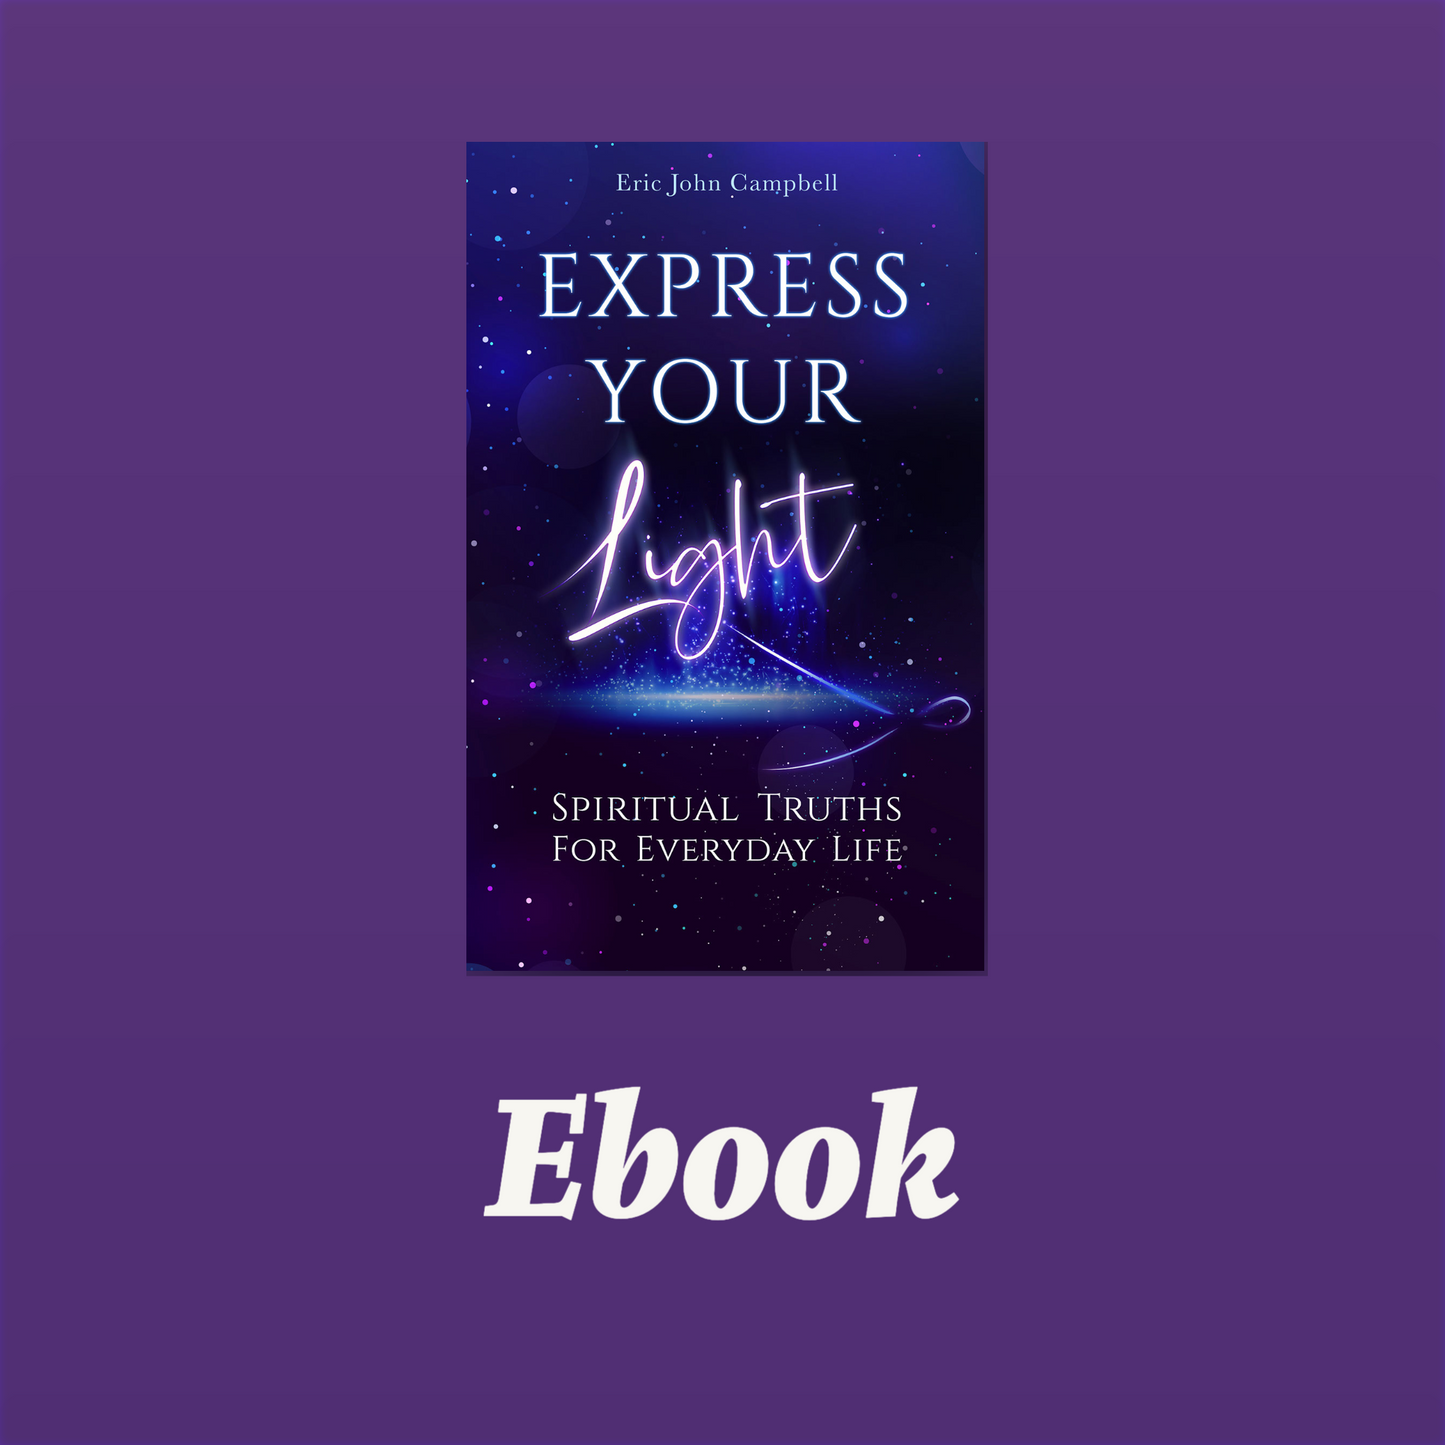 Express Your Light - Ebook